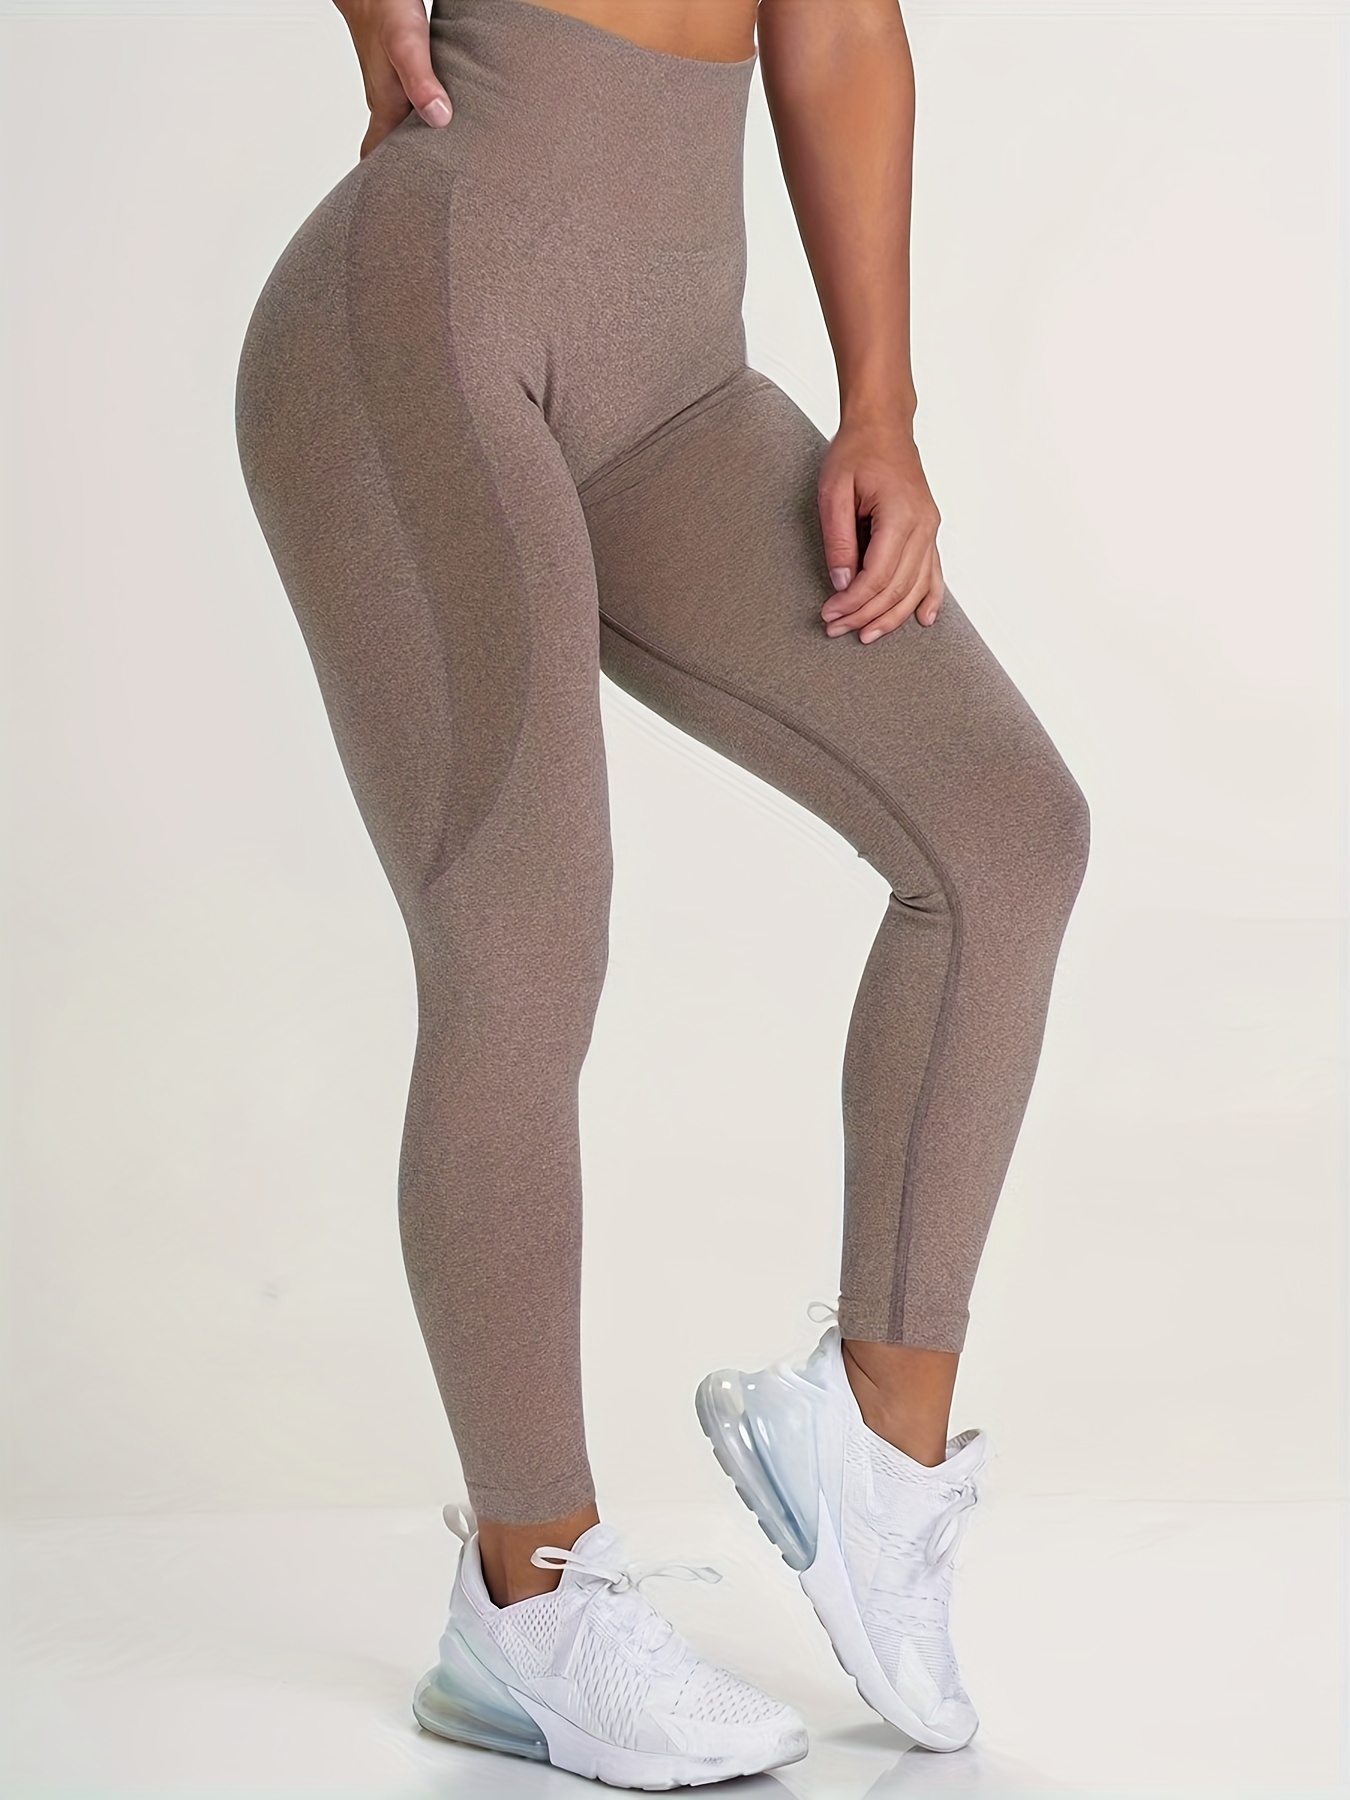 Leggins Deportivas Ropa Deportiva De Moda Licras Pantalones Para Yoga Mujer